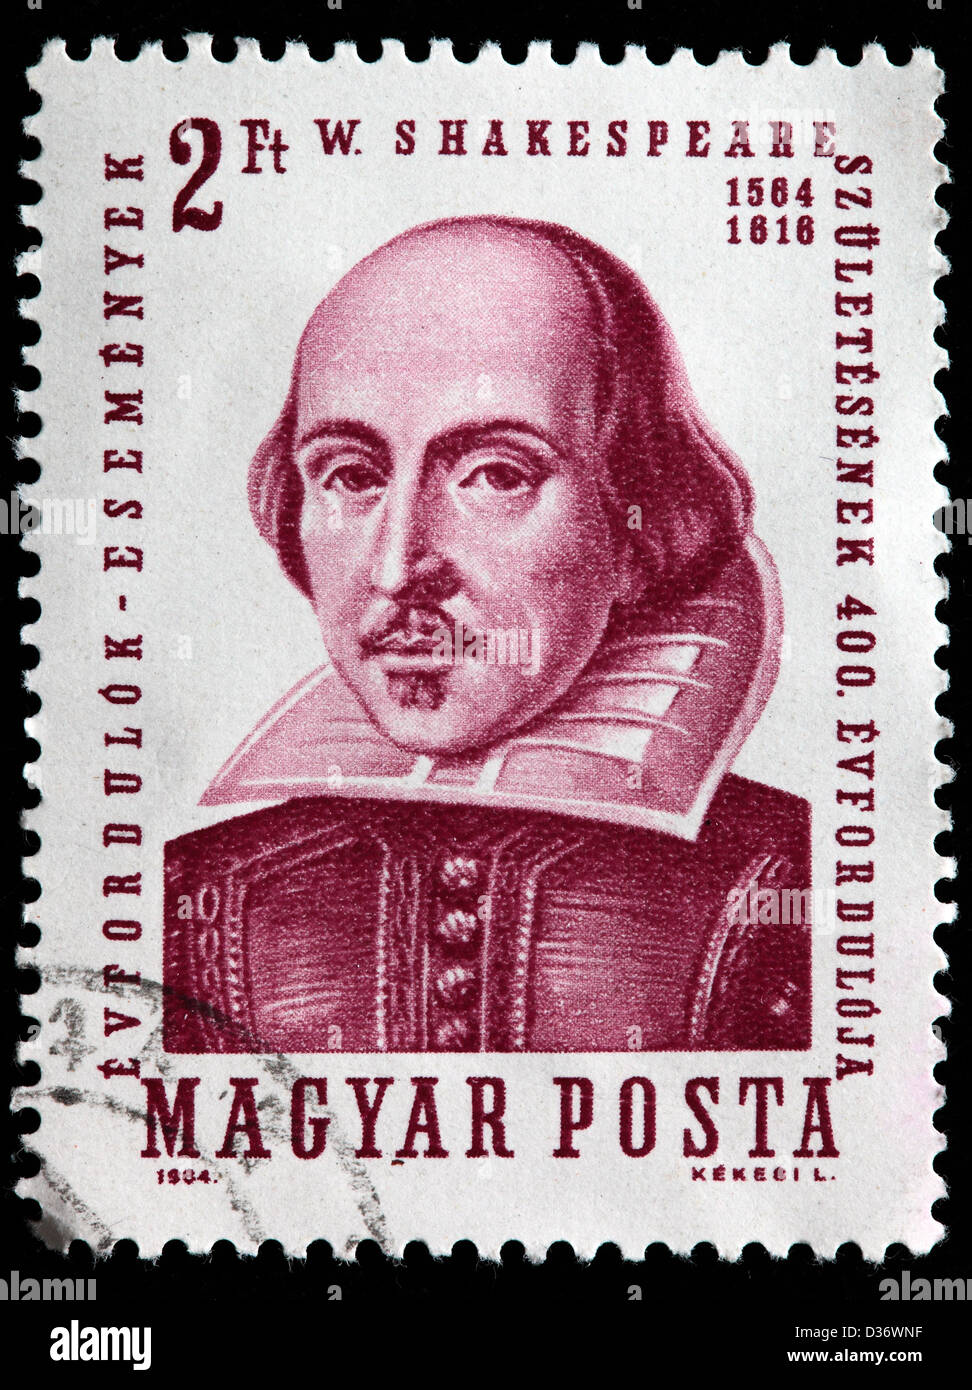 William Shakespeare, postage stamp, Hungary, 1964 Stock Photo